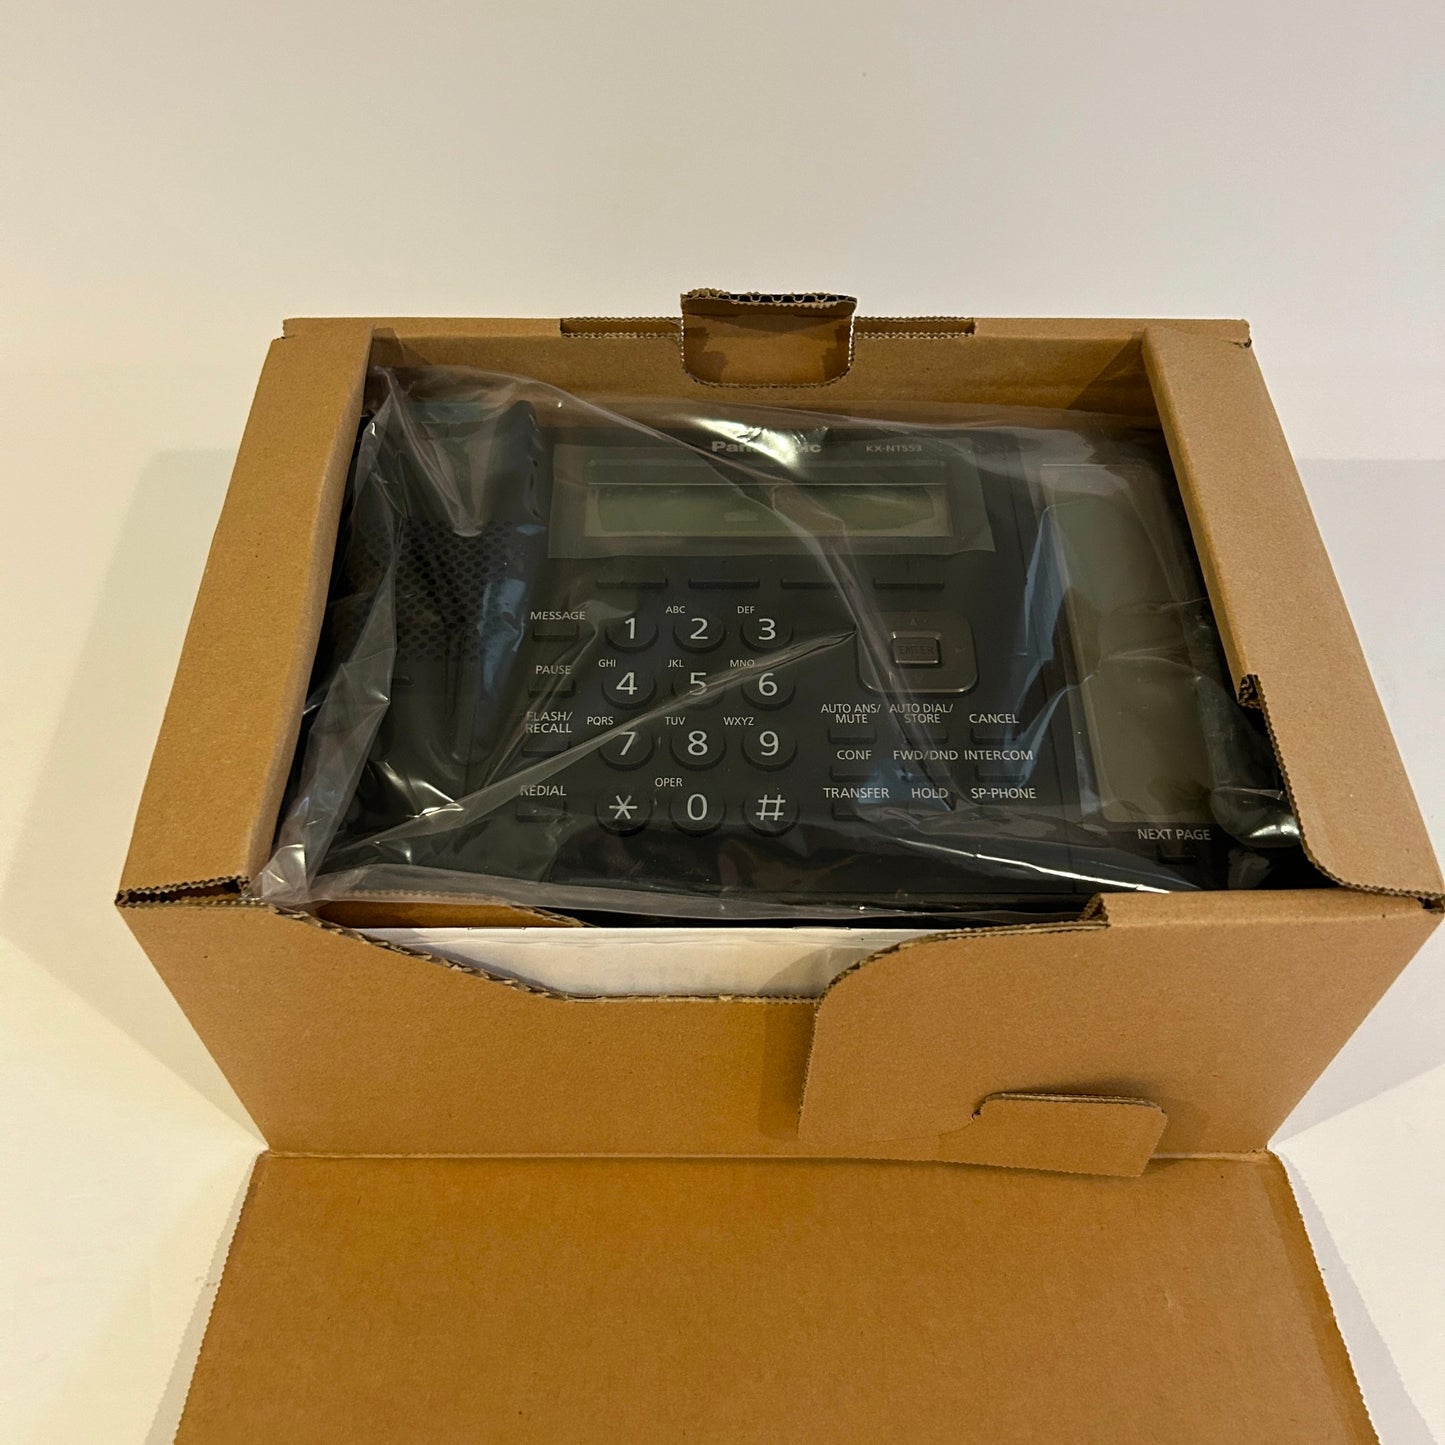 New Panasonic 24-Button Black IP POE Speakerphone - KX-NT553